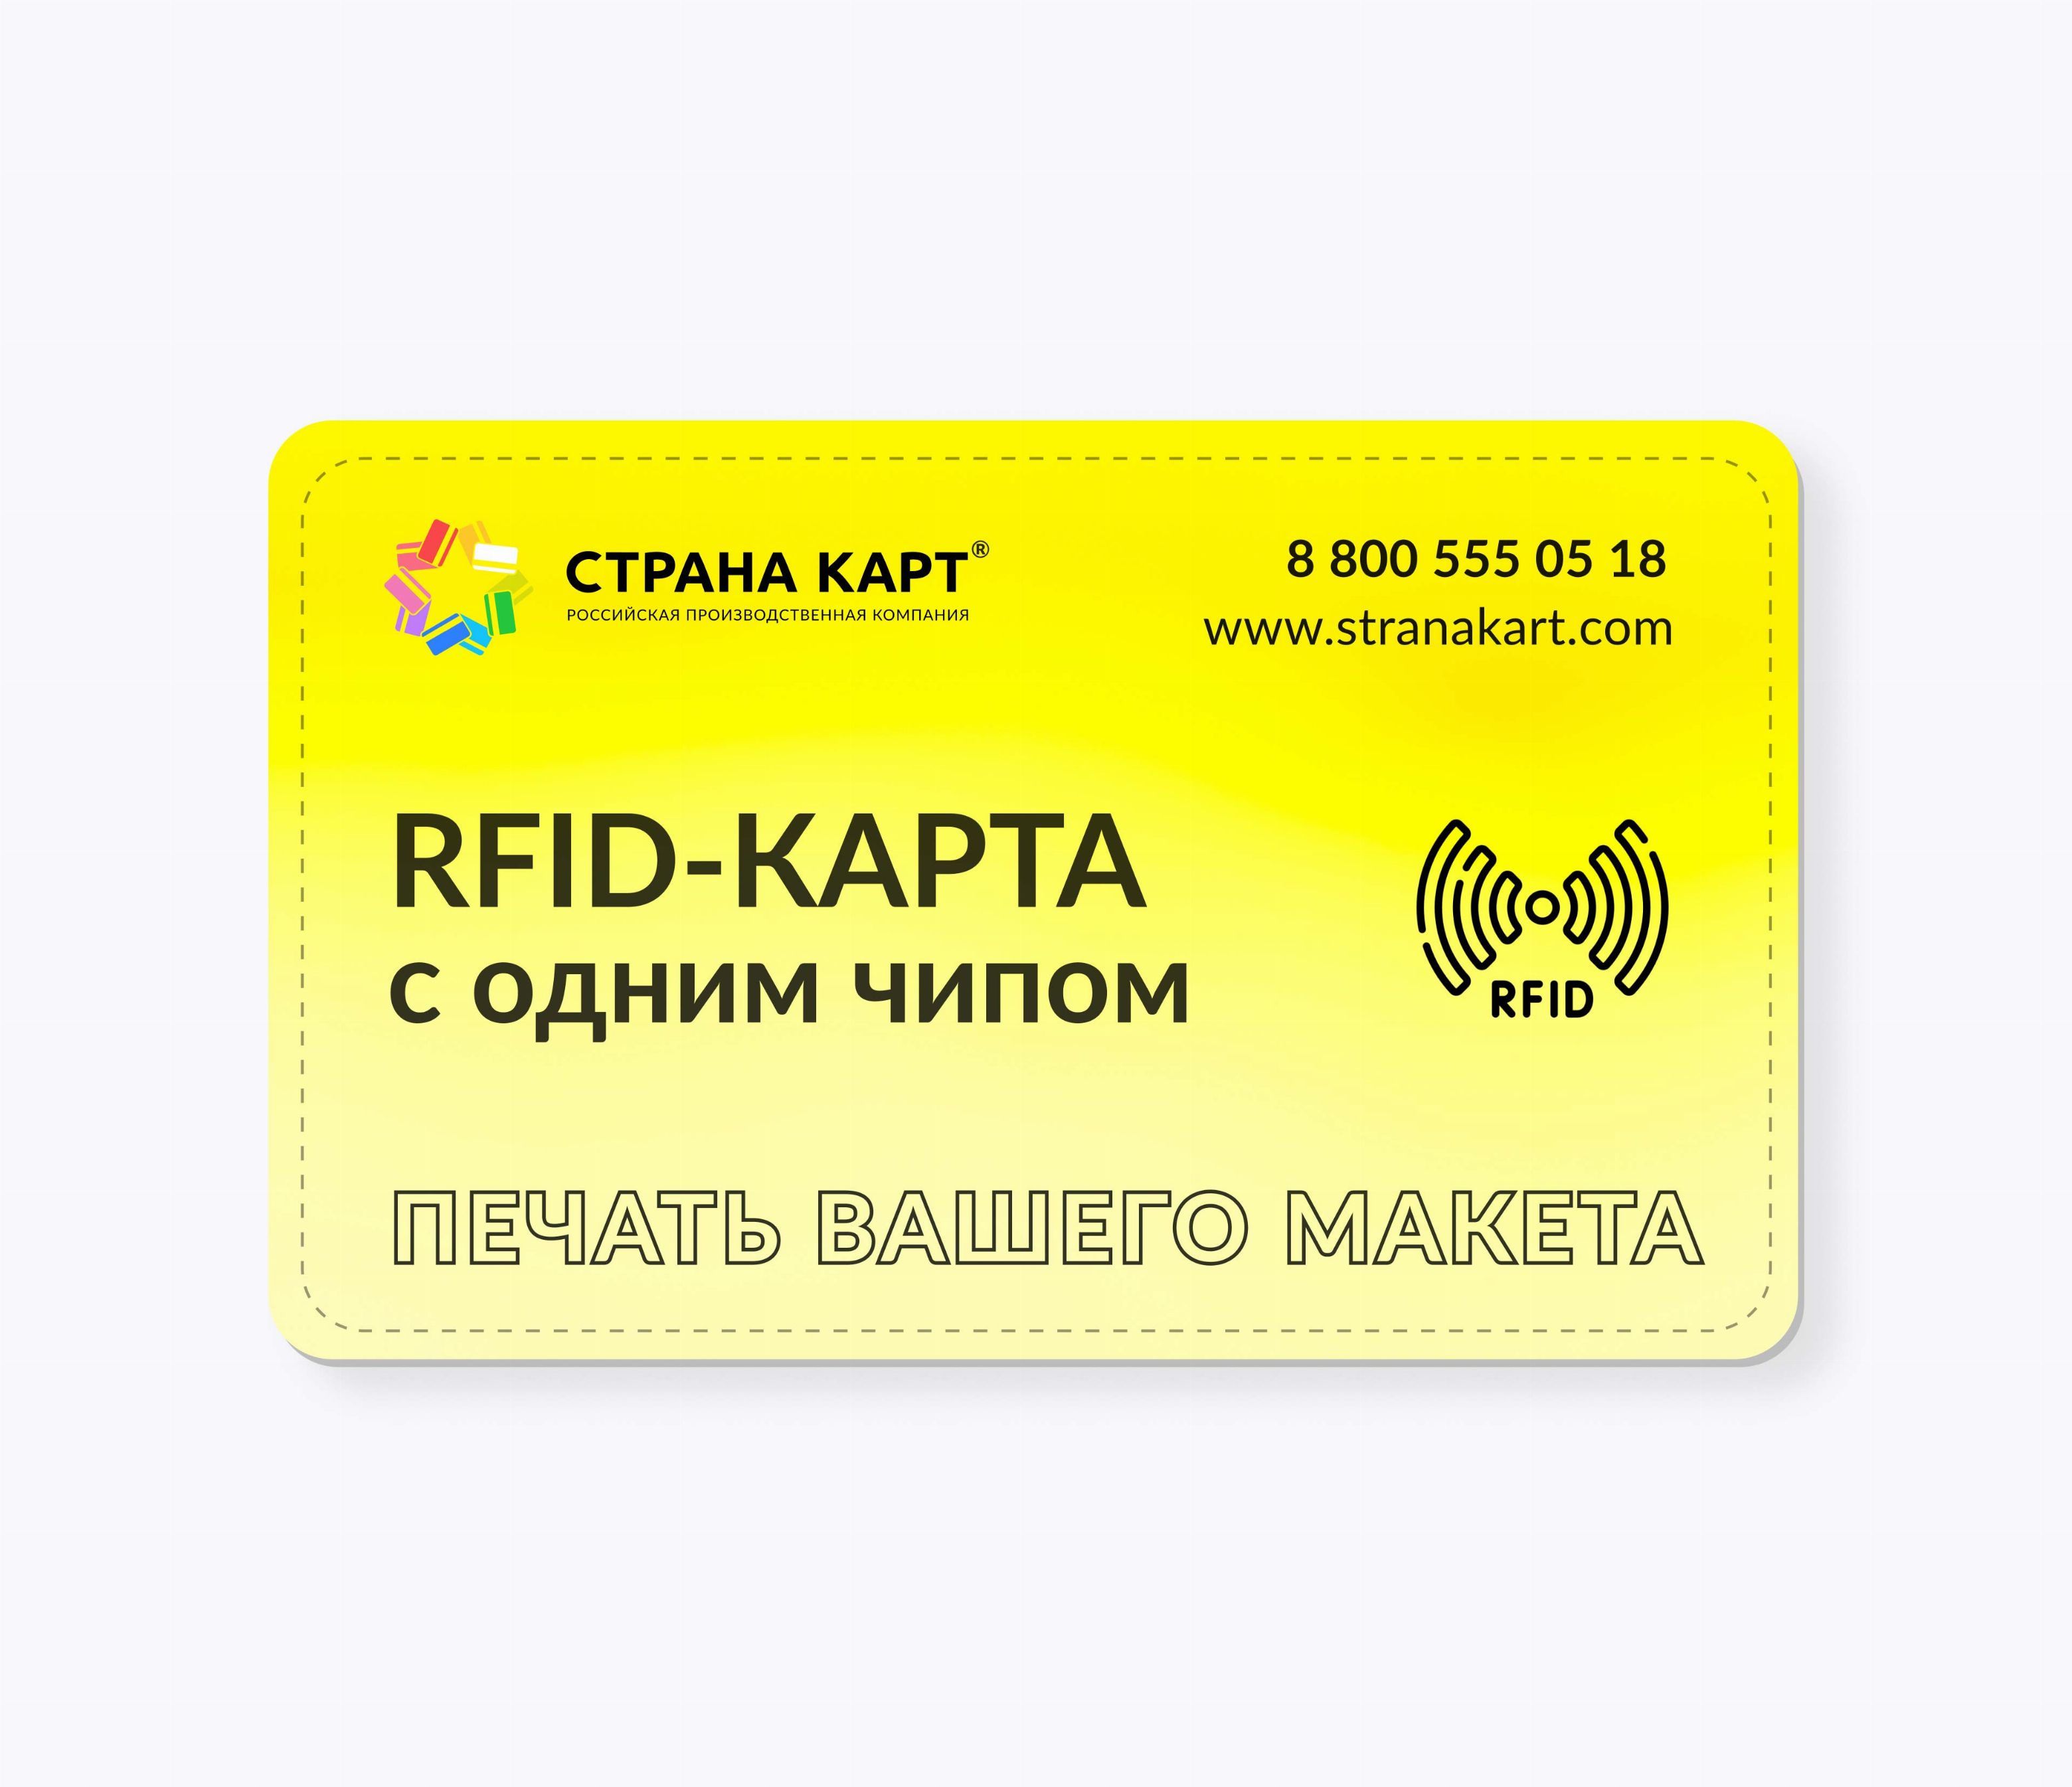 RFID-карты с чипом NXP MIFARE Plus X 2k 7 byte UID печать вашего макета RFID-карты с чипом NXP MIFARE Plus X 2k 7 byte UID